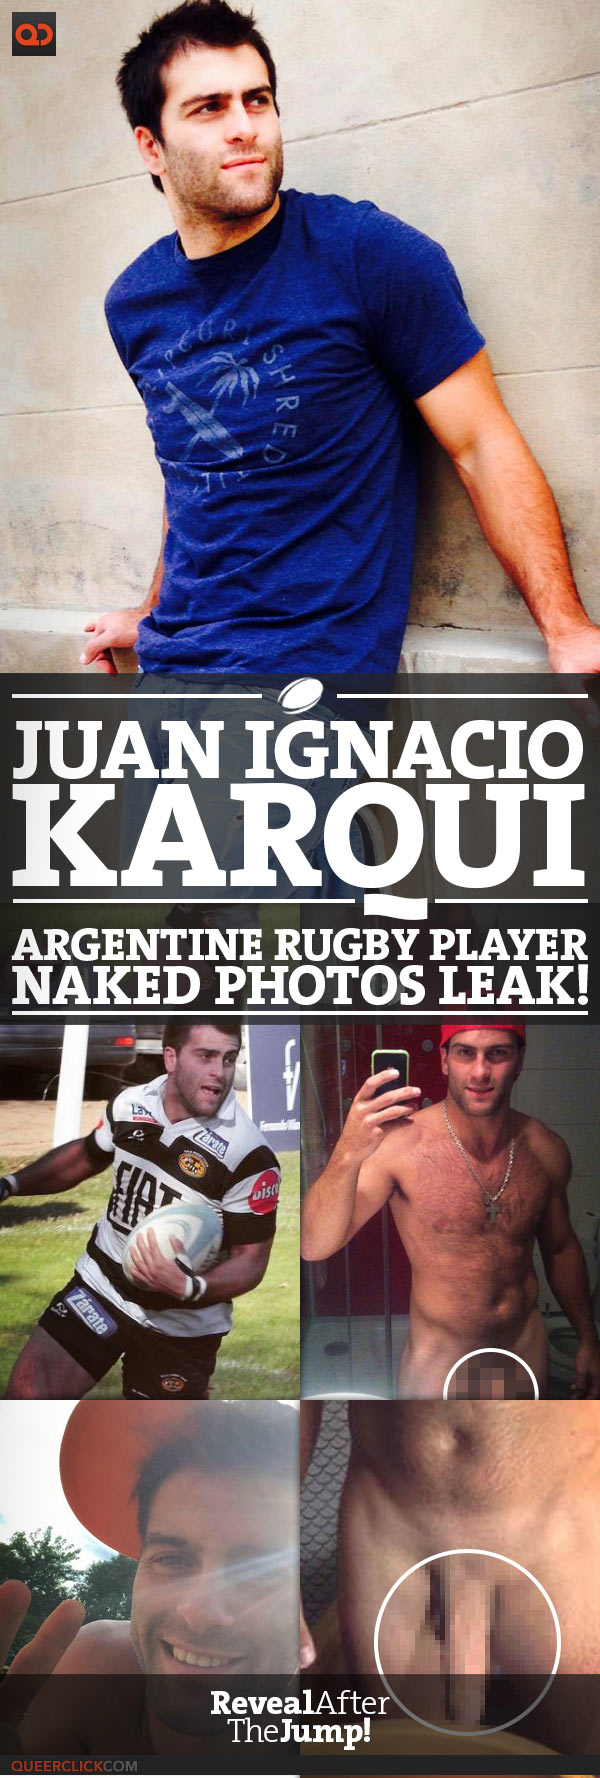 Juan Ignacio Karqui, Argentine Rugby Player, Naked Photos Leak!